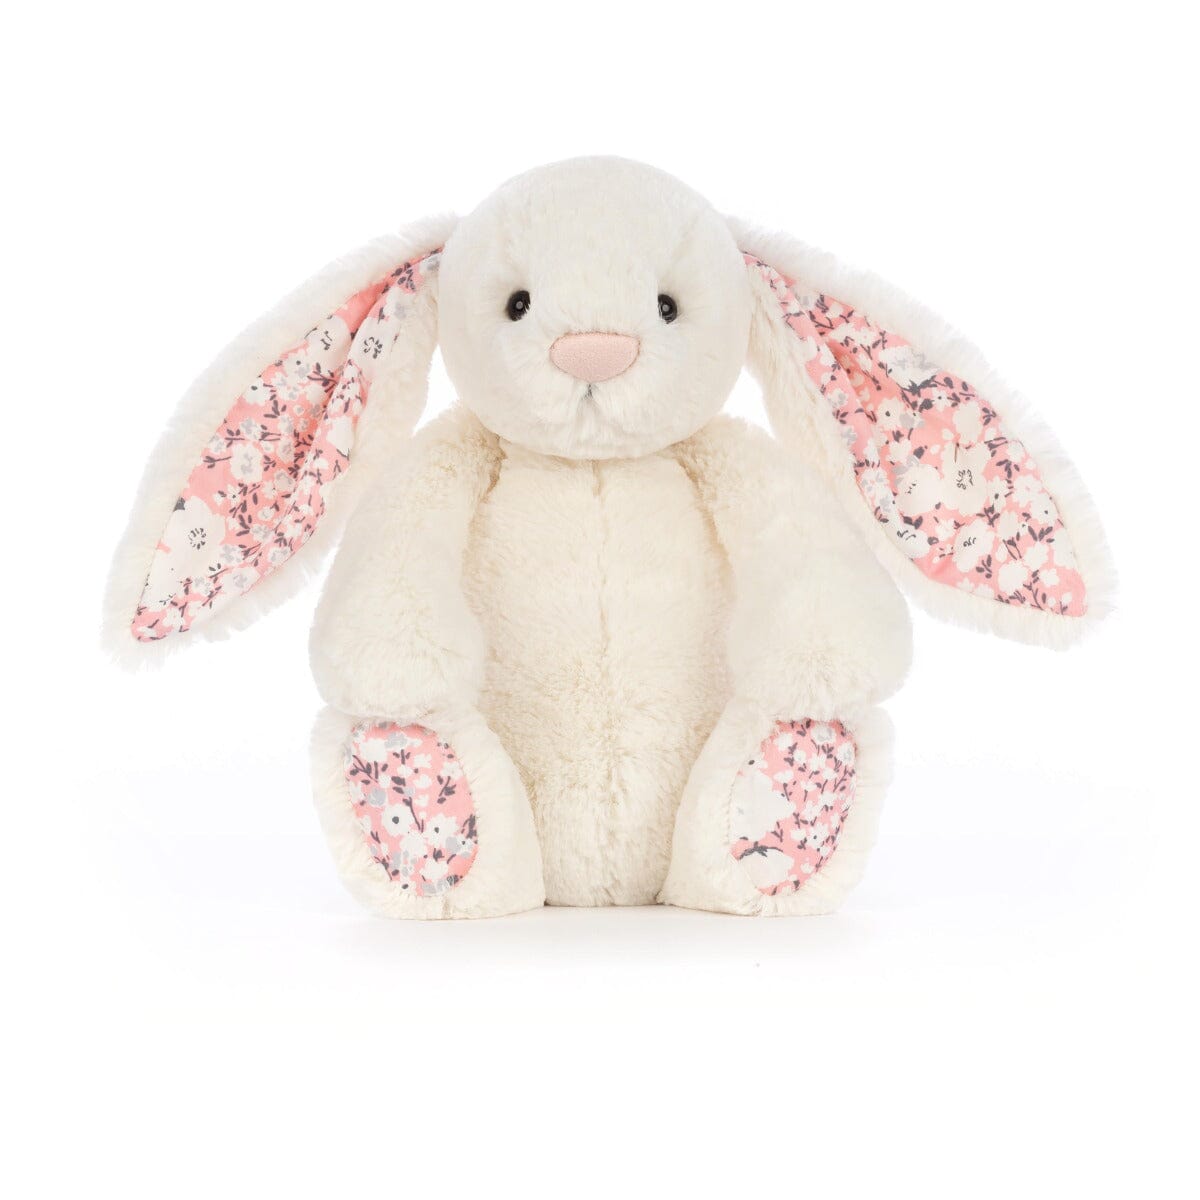 Jellycat Bashful - Blossom Cherry Bunny Medium Soft Toy Jellycat 